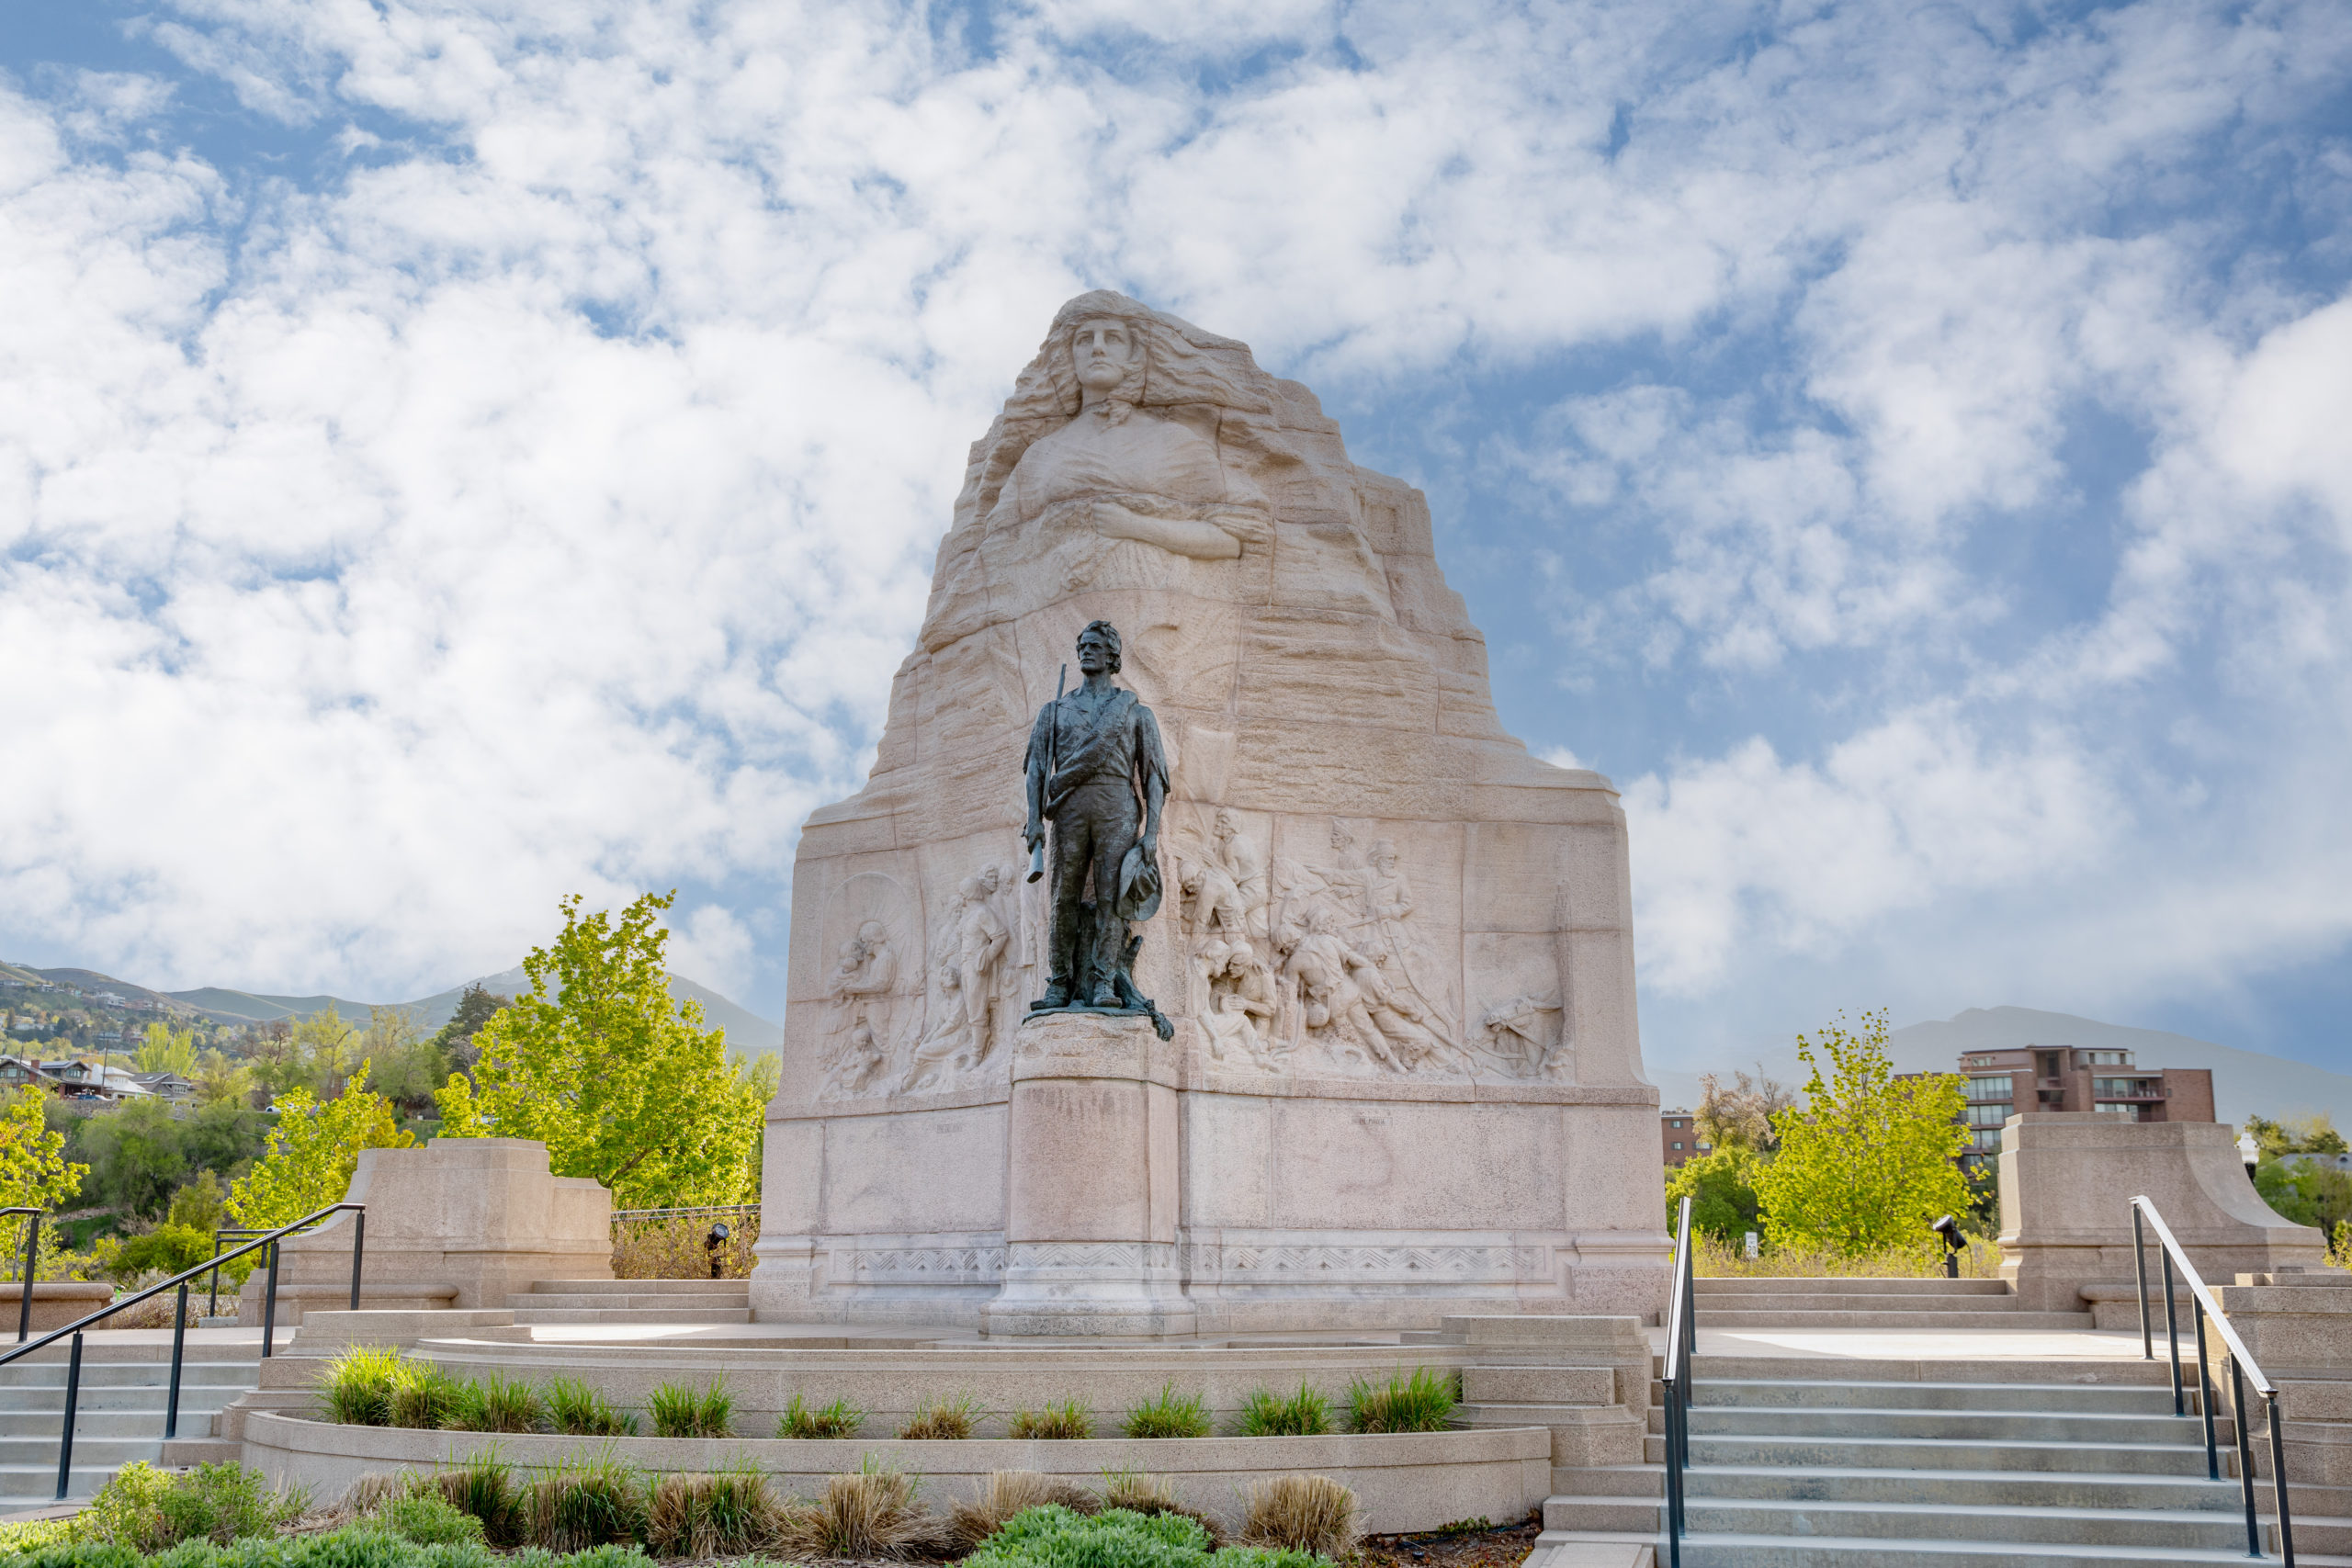 Featured image for “Mormon Battalion Monument”